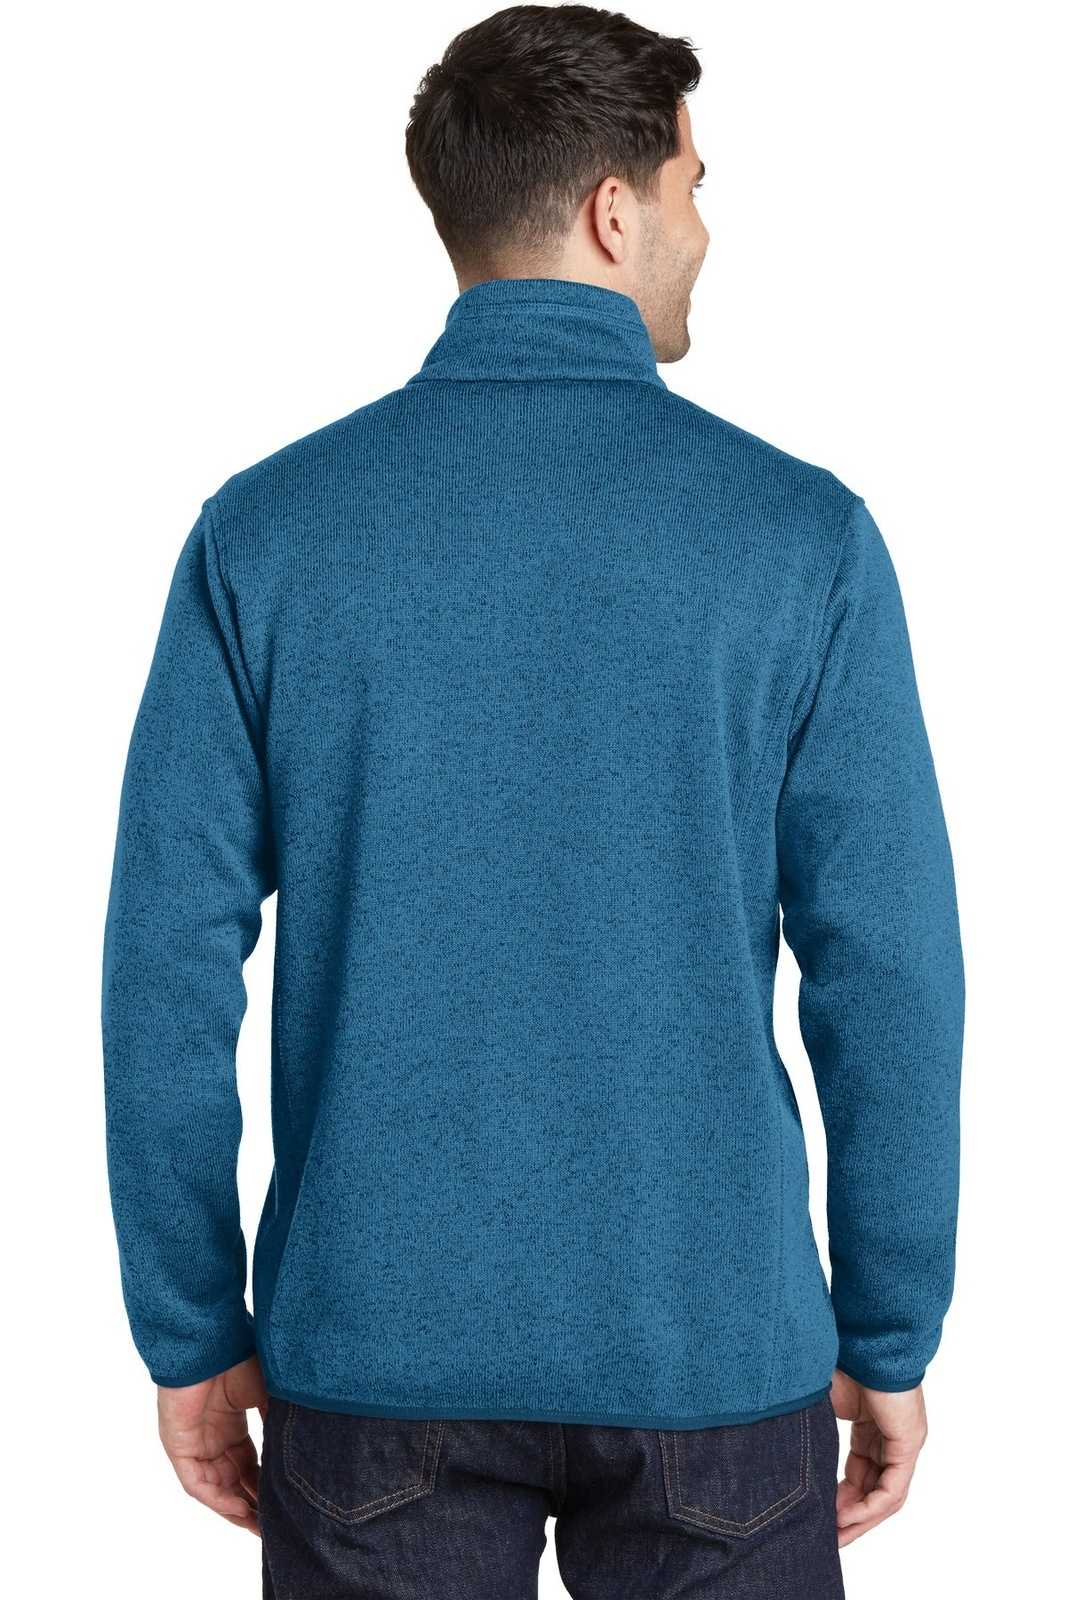 Port Authority F232 Sweater Fleece Jacket - Medium Blue Heather - HIT a Double - 2